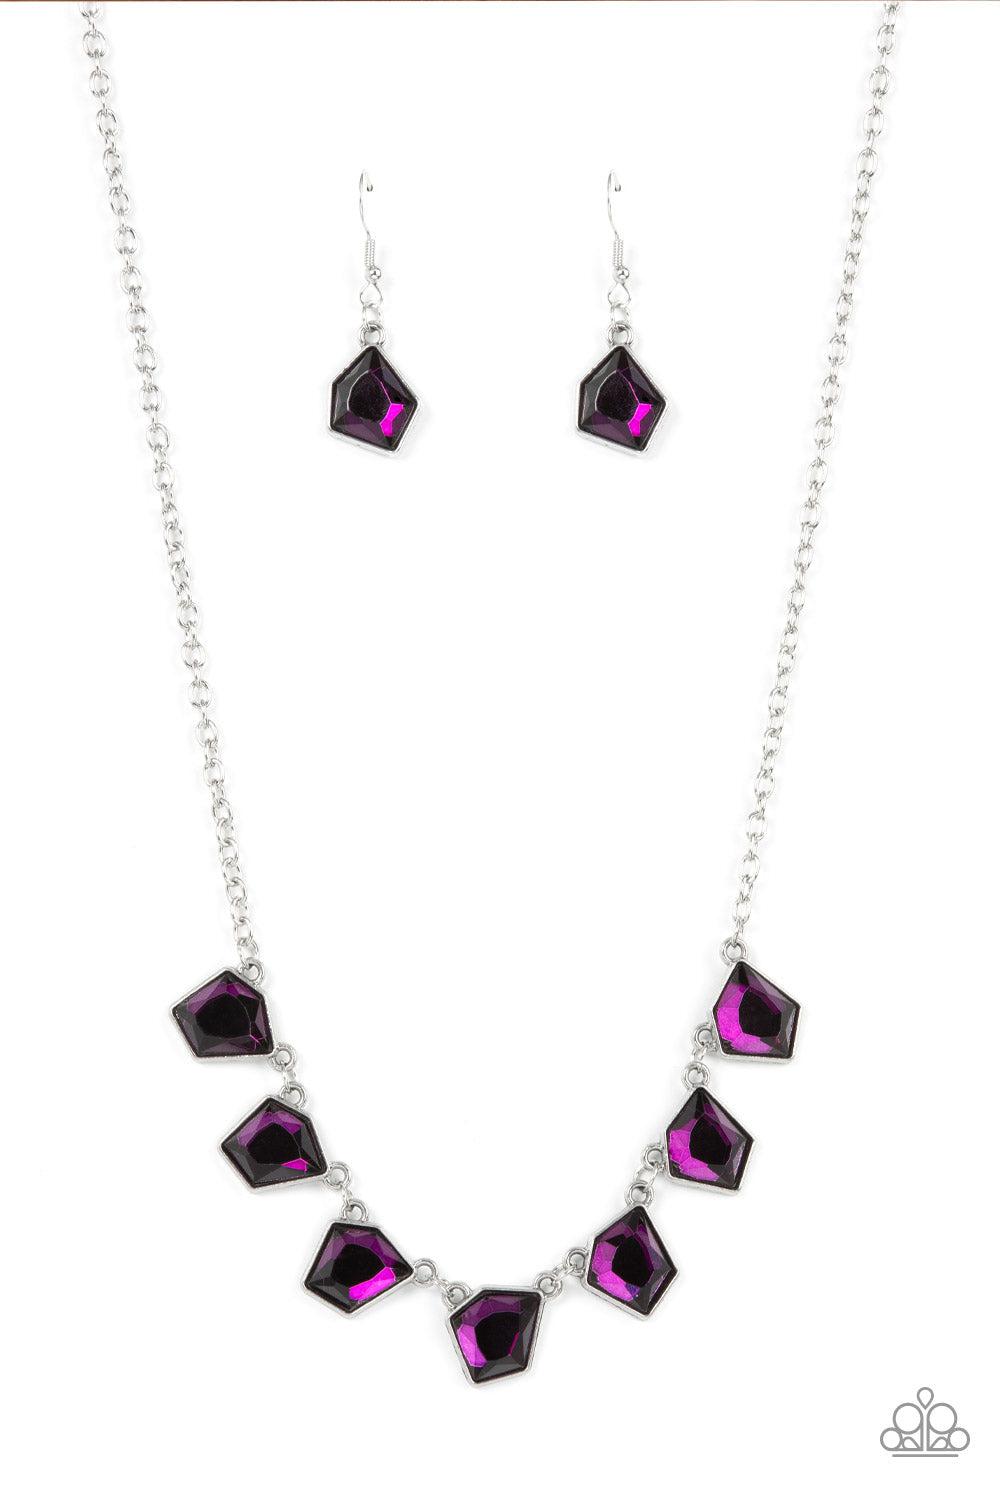 Experimental Edge Purple Rhinestone Necklace - Paparazzi Accessories- lightbox - CarasShop.com - $5 Jewelry by Cara Jewels